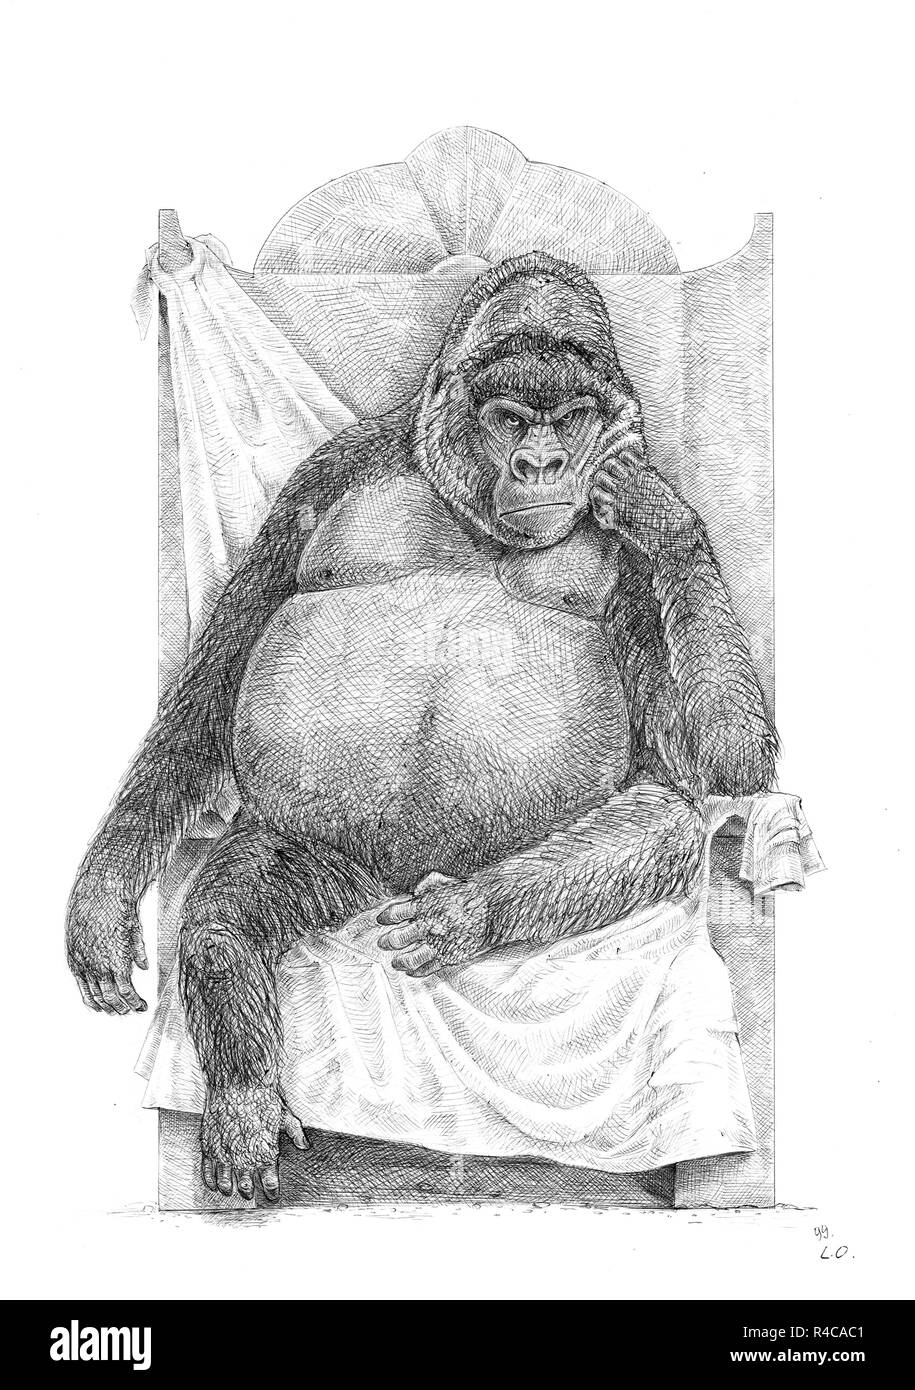 Gorilla king. Big ape drawing. Stock Photo